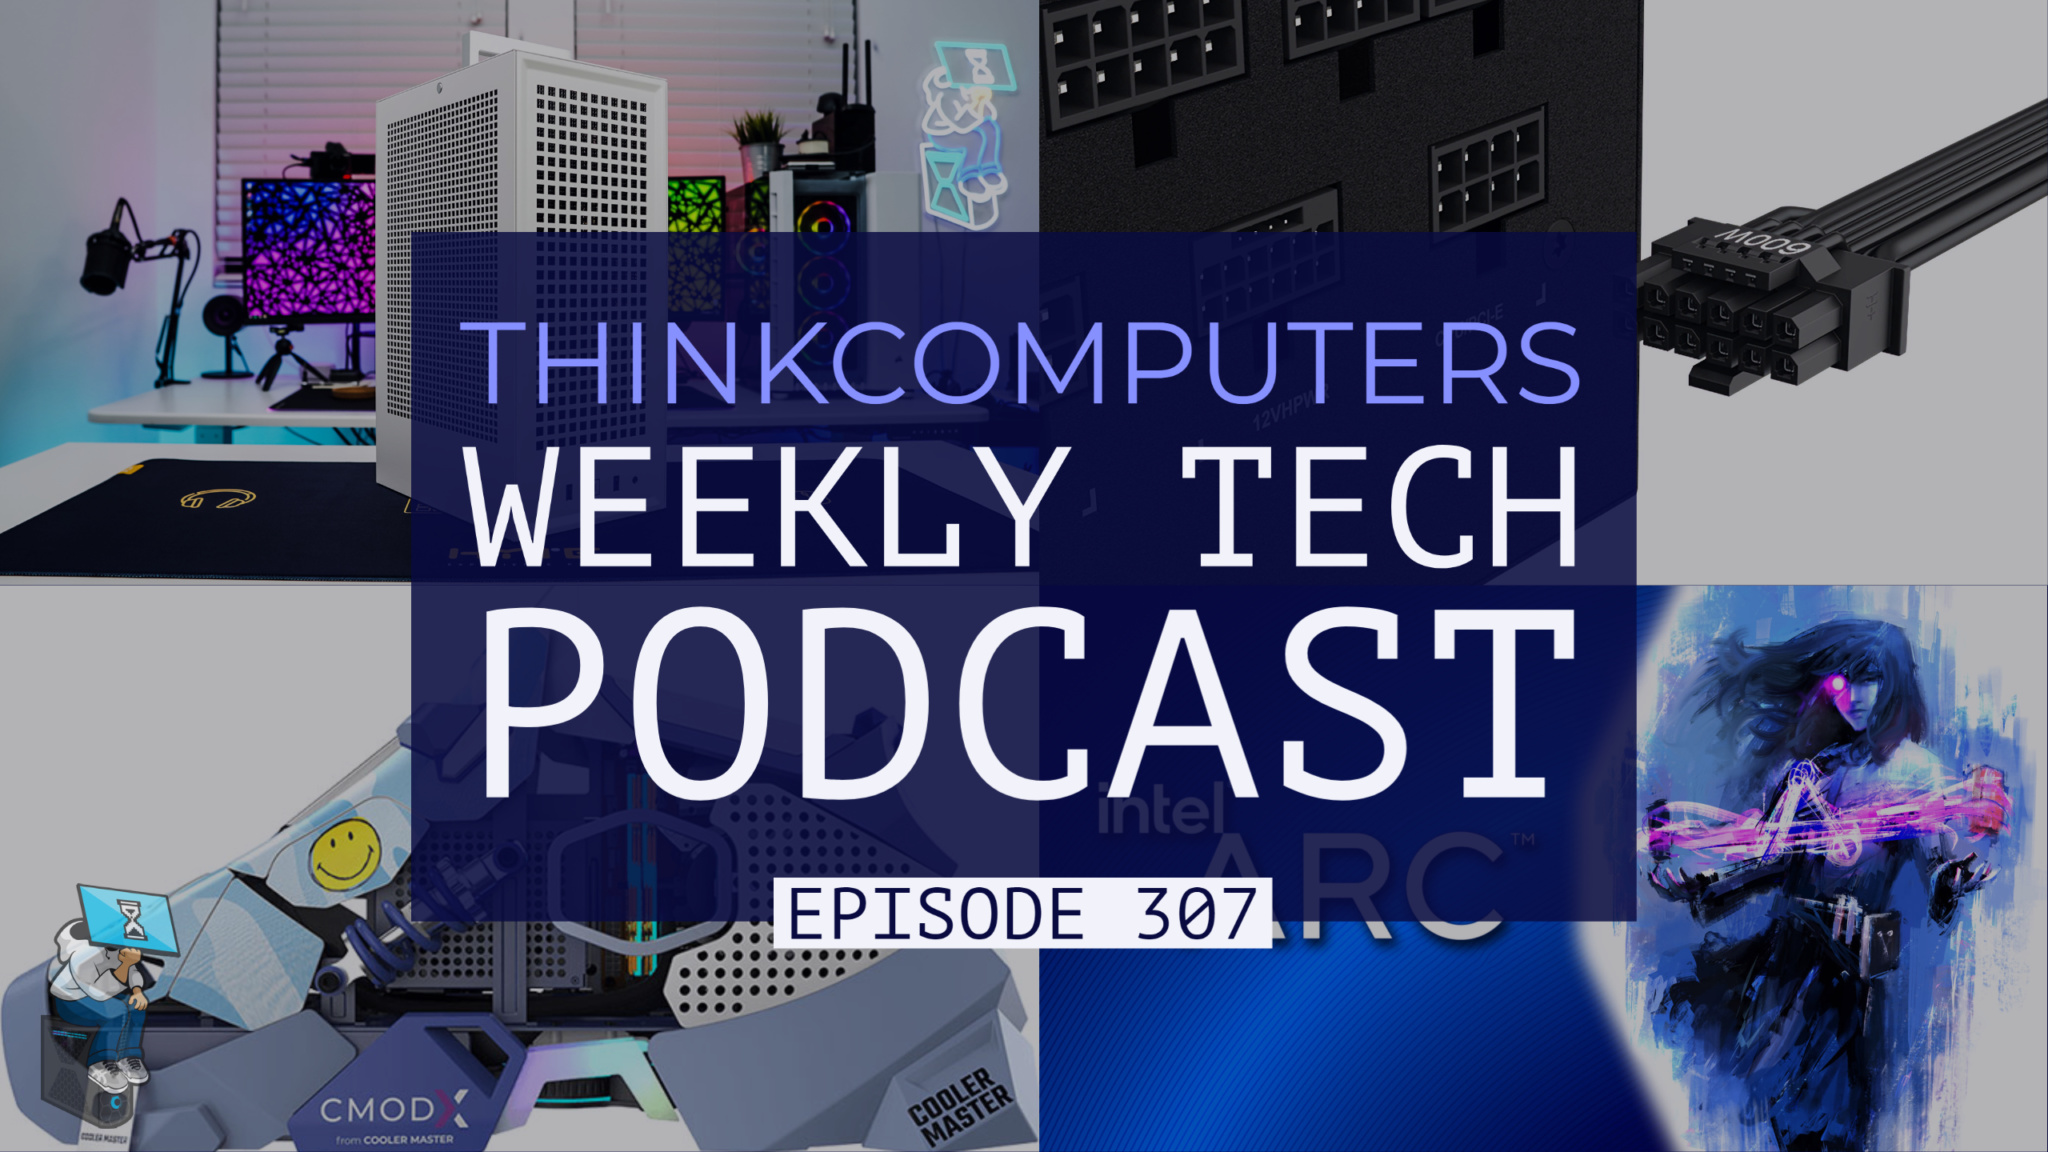 ThinkComputers Podcast #307